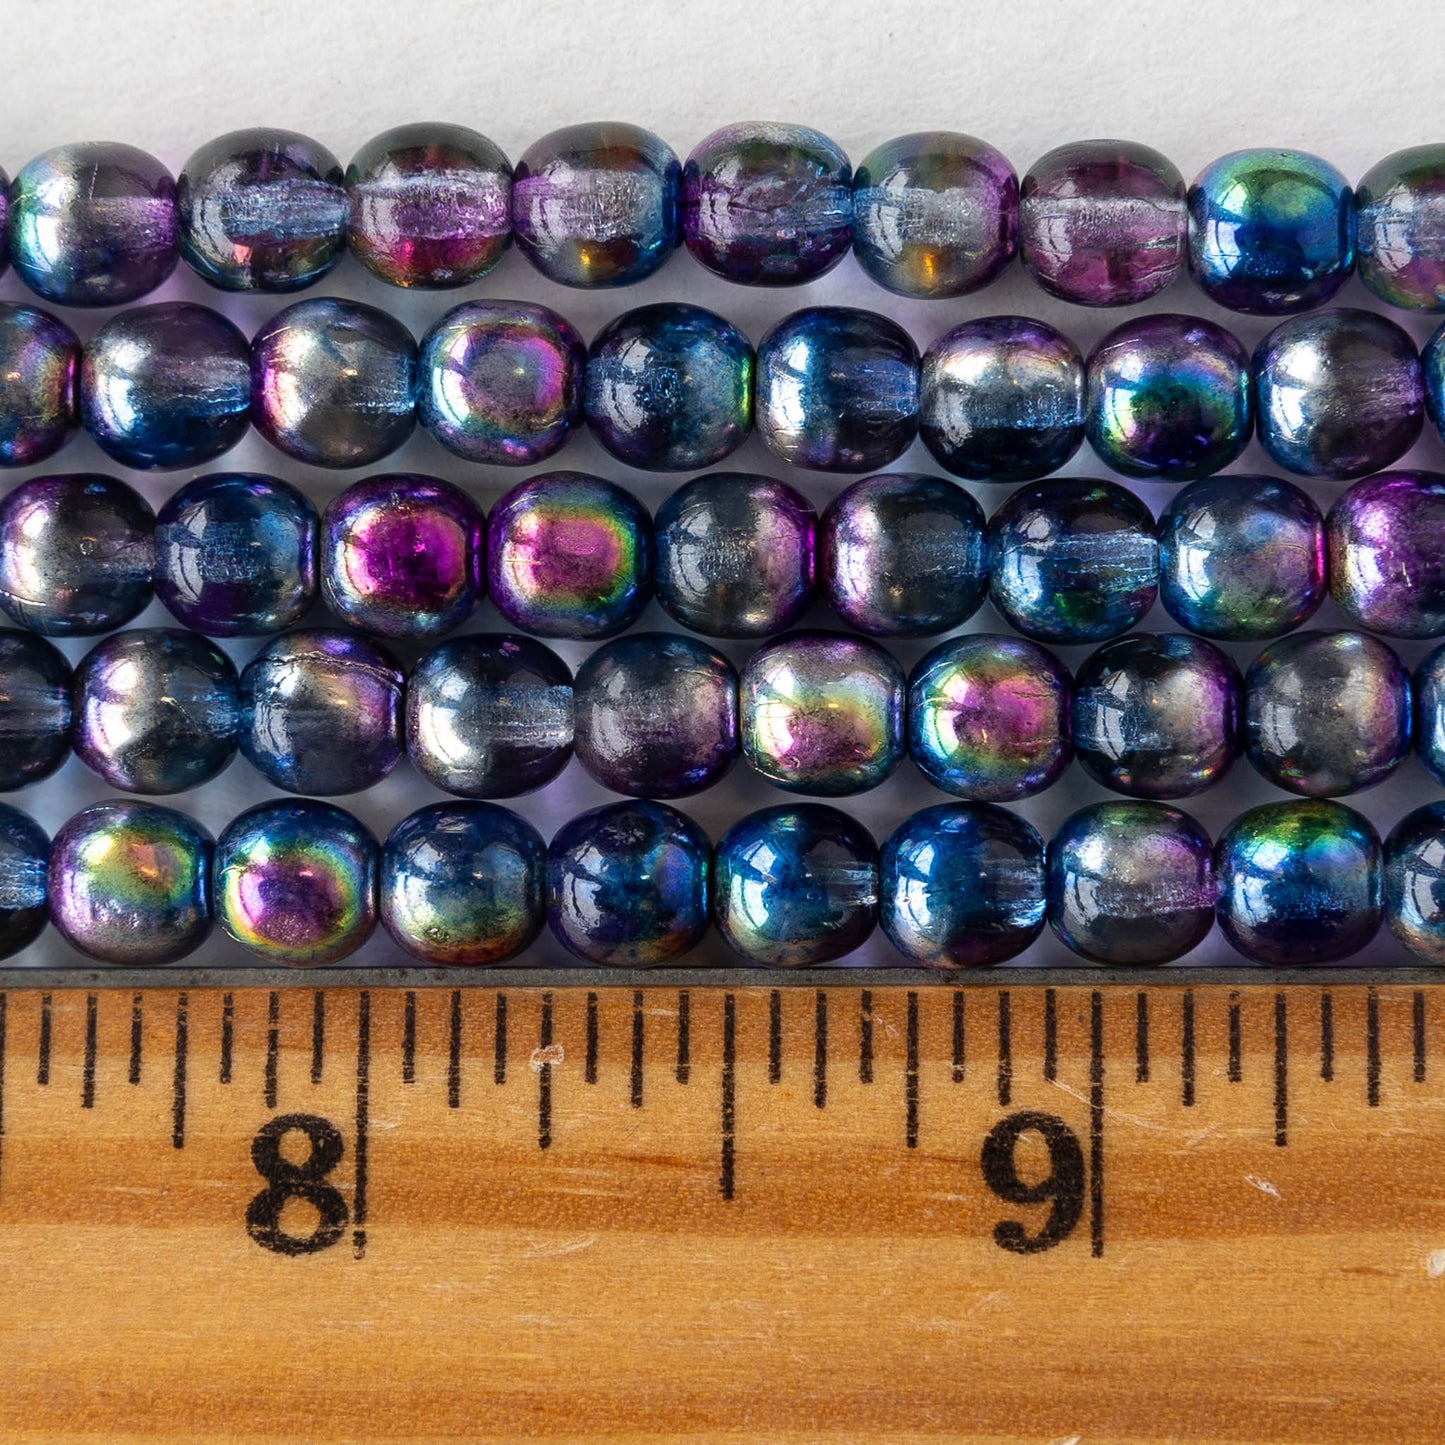 6mm Round Glass Beads - Blueberry Mix - 25 Beads